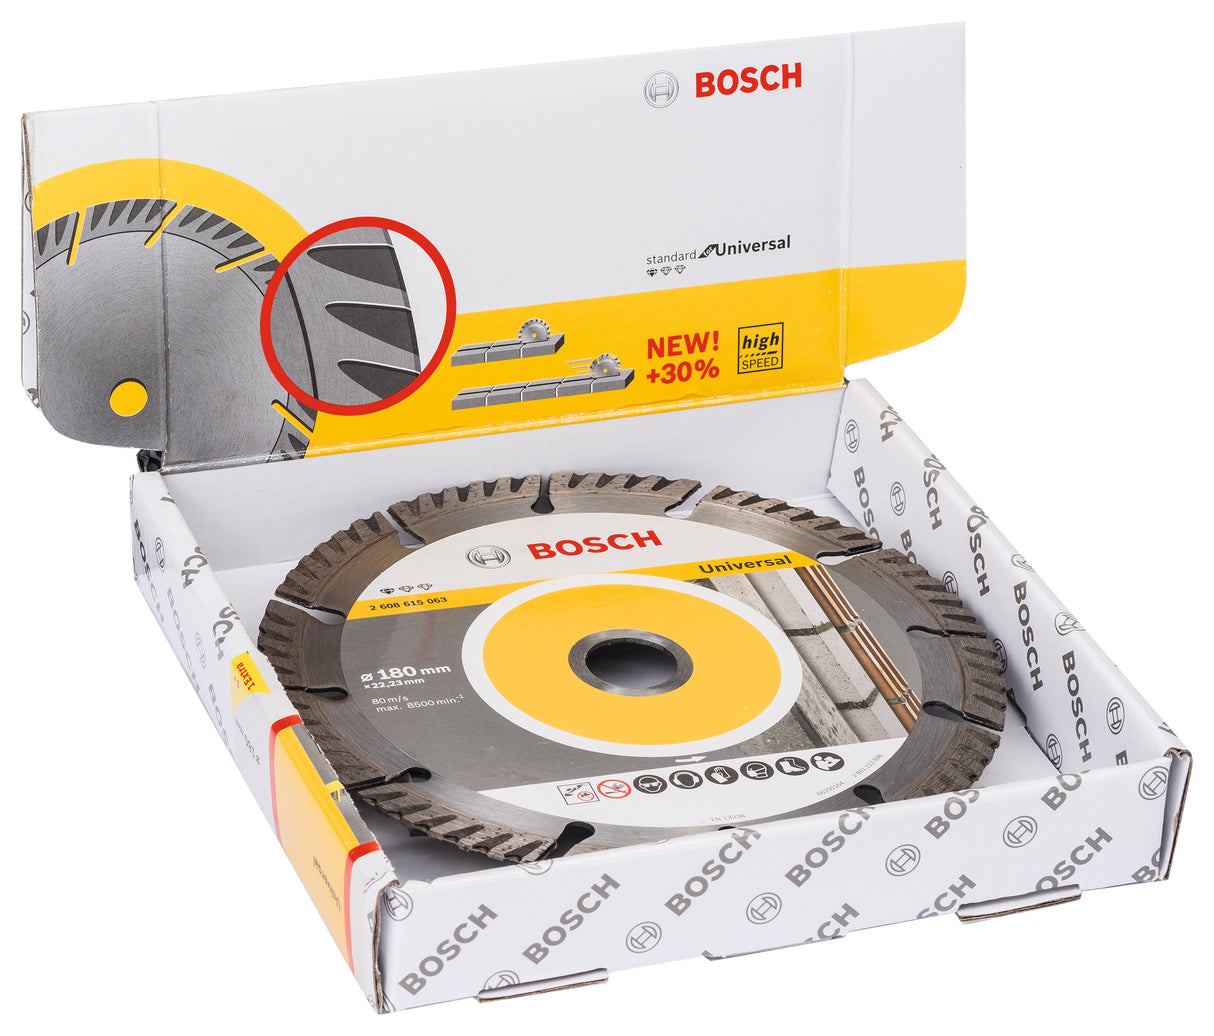 Bosch Professional Diamond Cutting Disc - Standard Universal (10 Pack) - 180x22.23x2.4x10mm